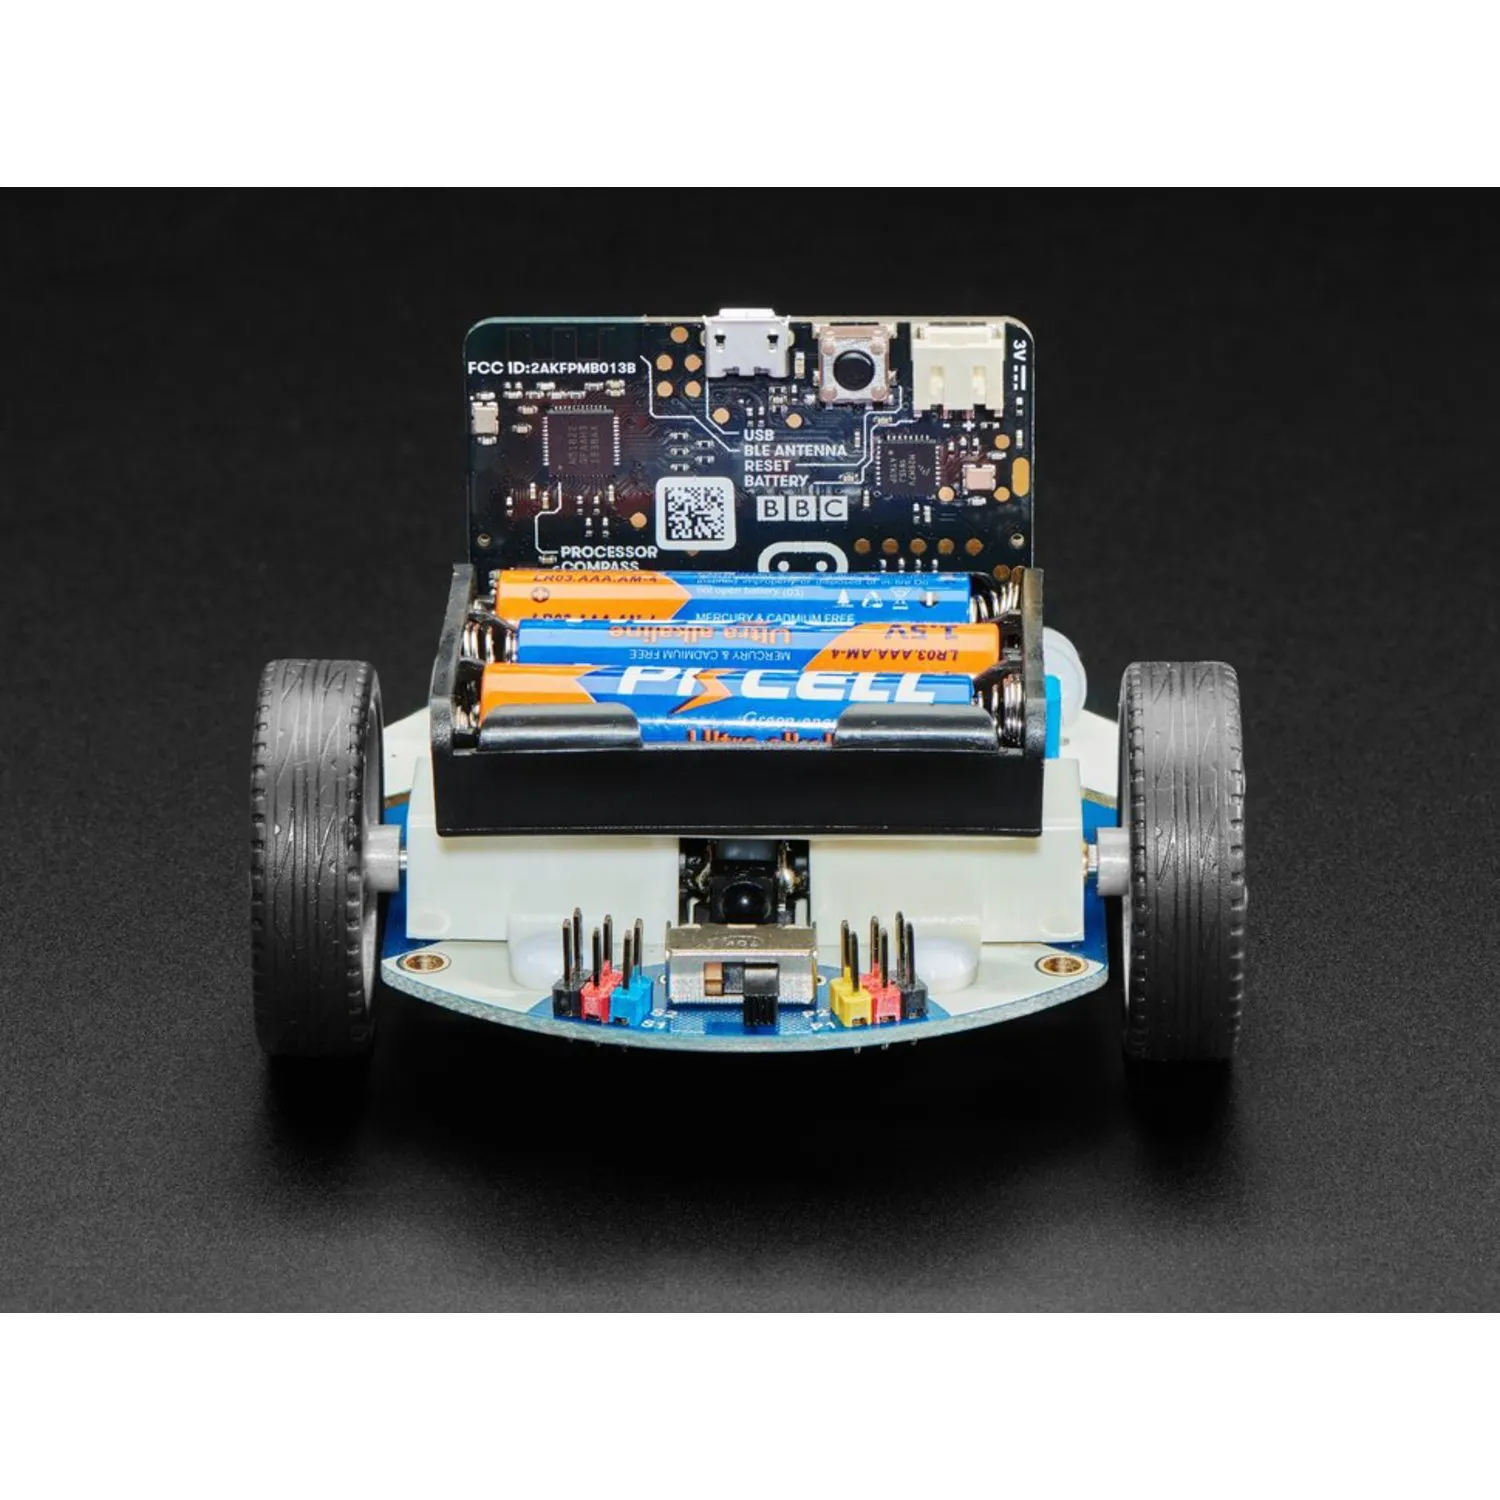 Photo of Smart Car Cutebot Robot for micro:bit